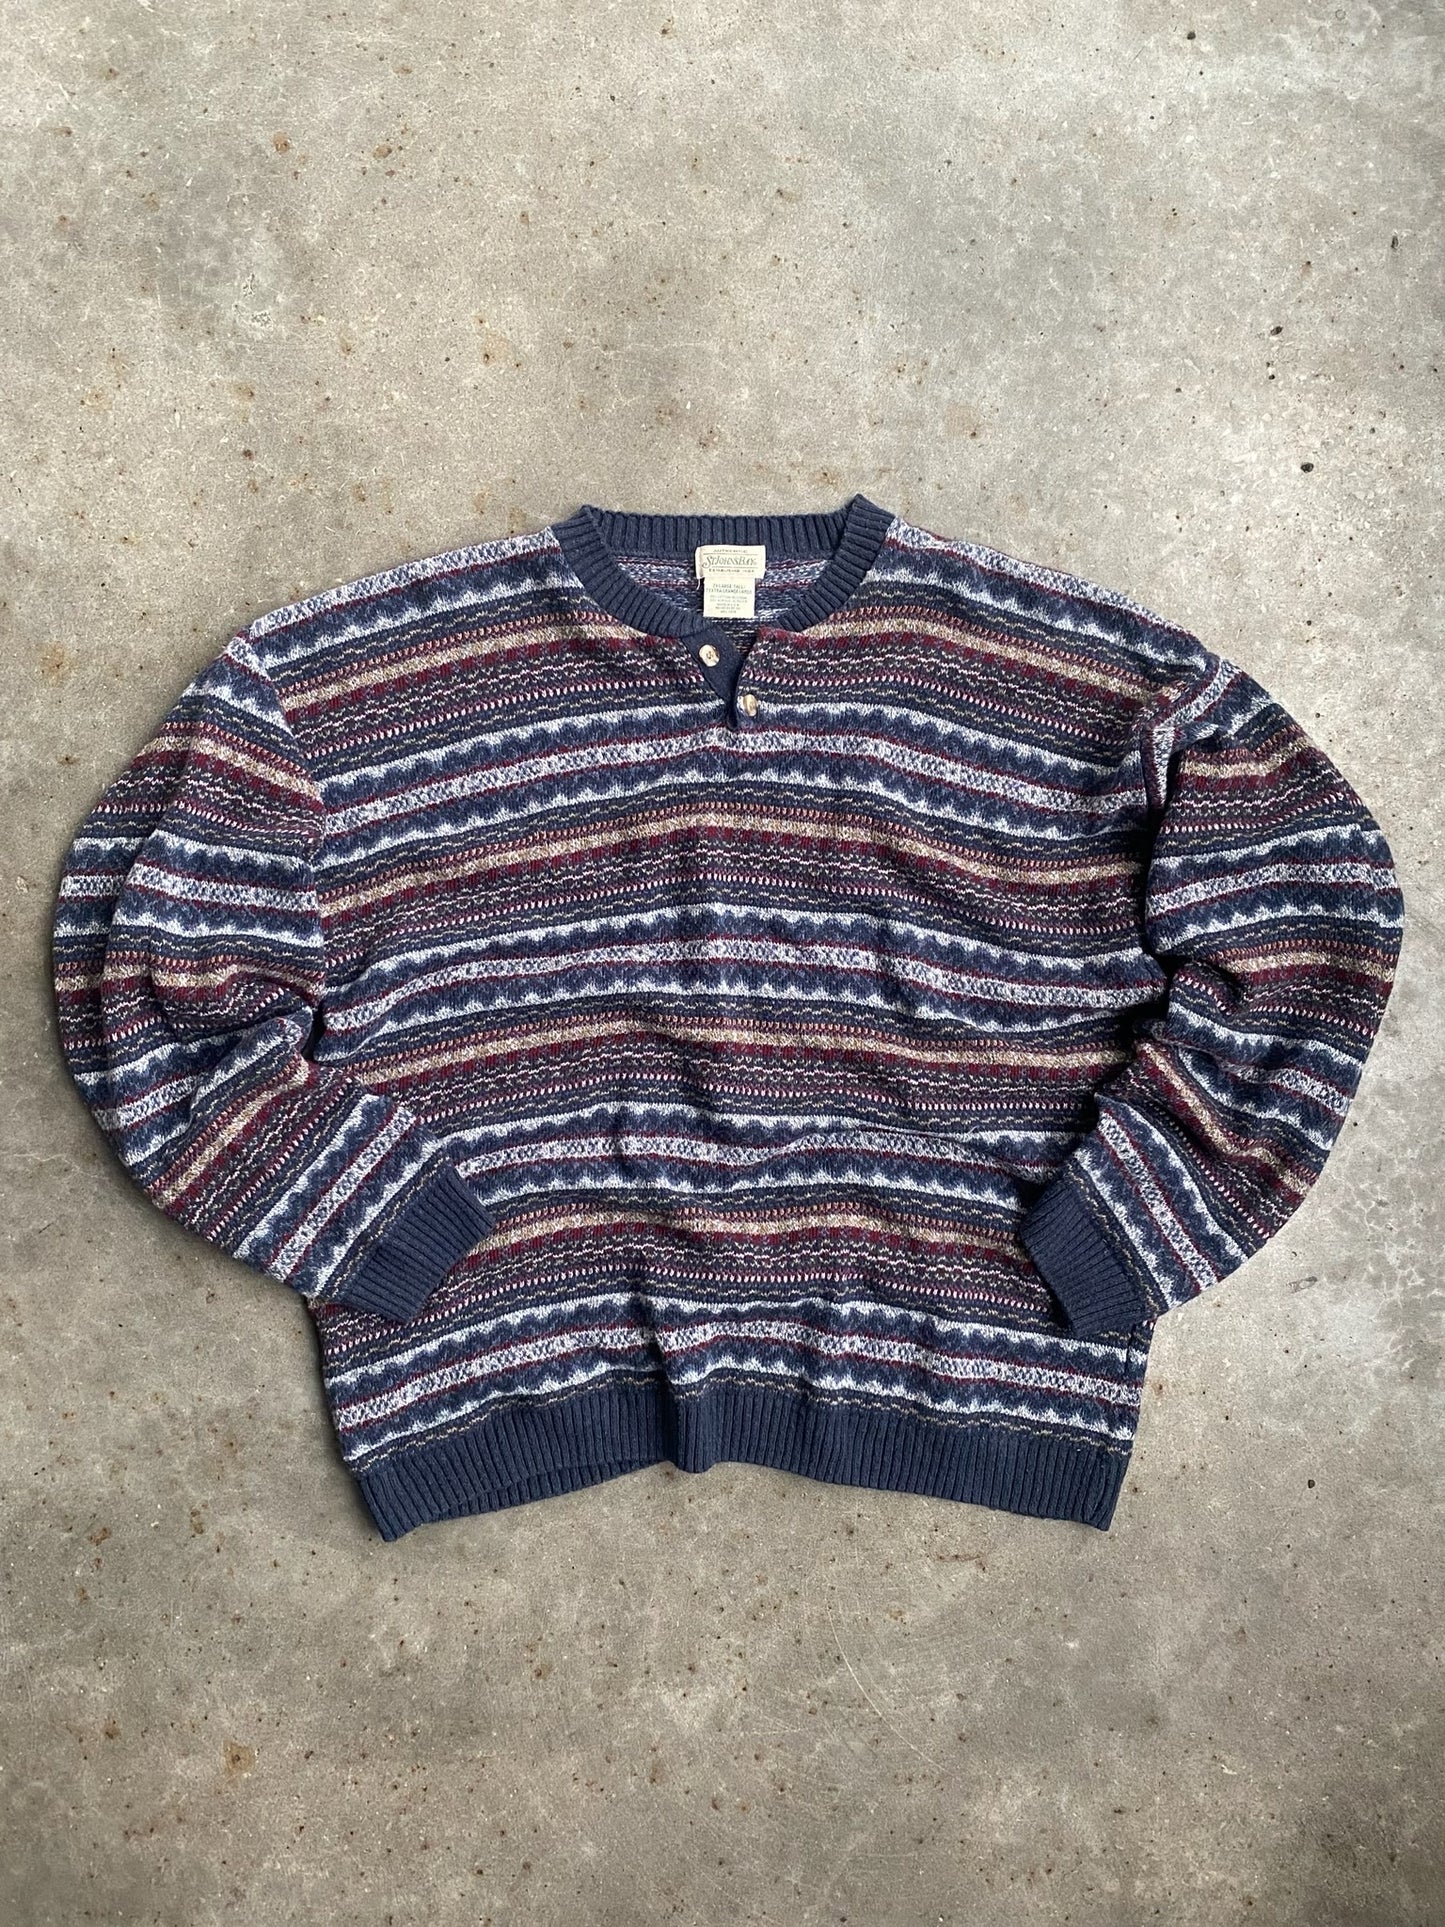 Vintage St. John’s Bay Sweater - XXL